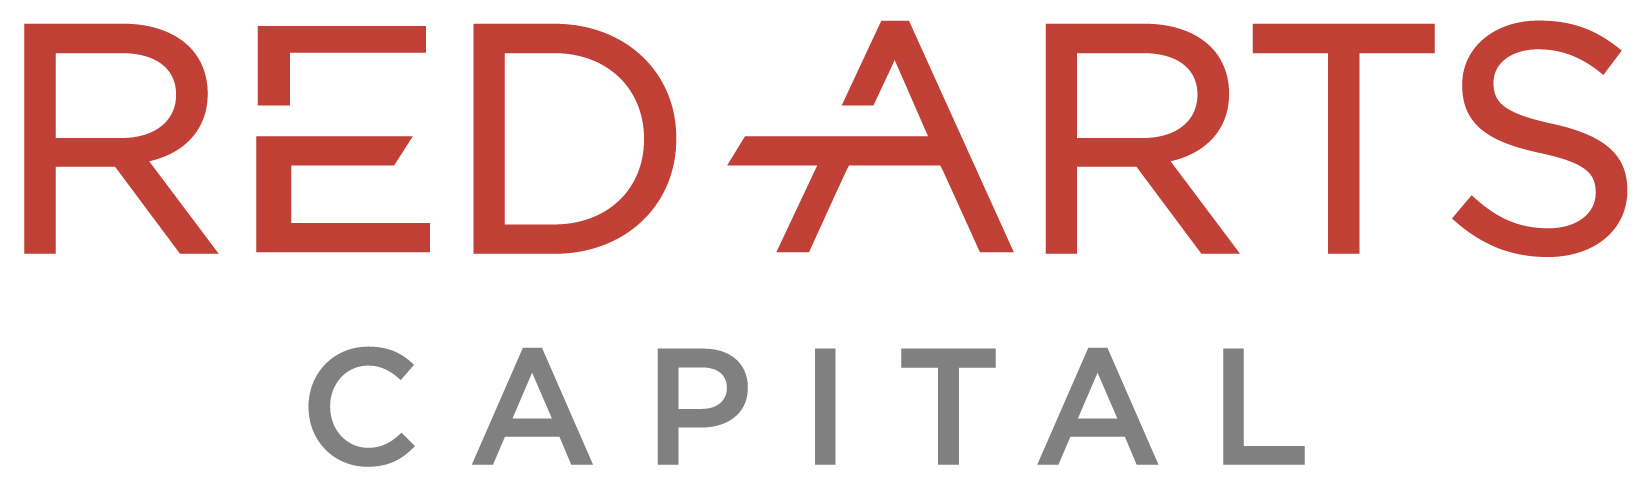 Red Arts Capital